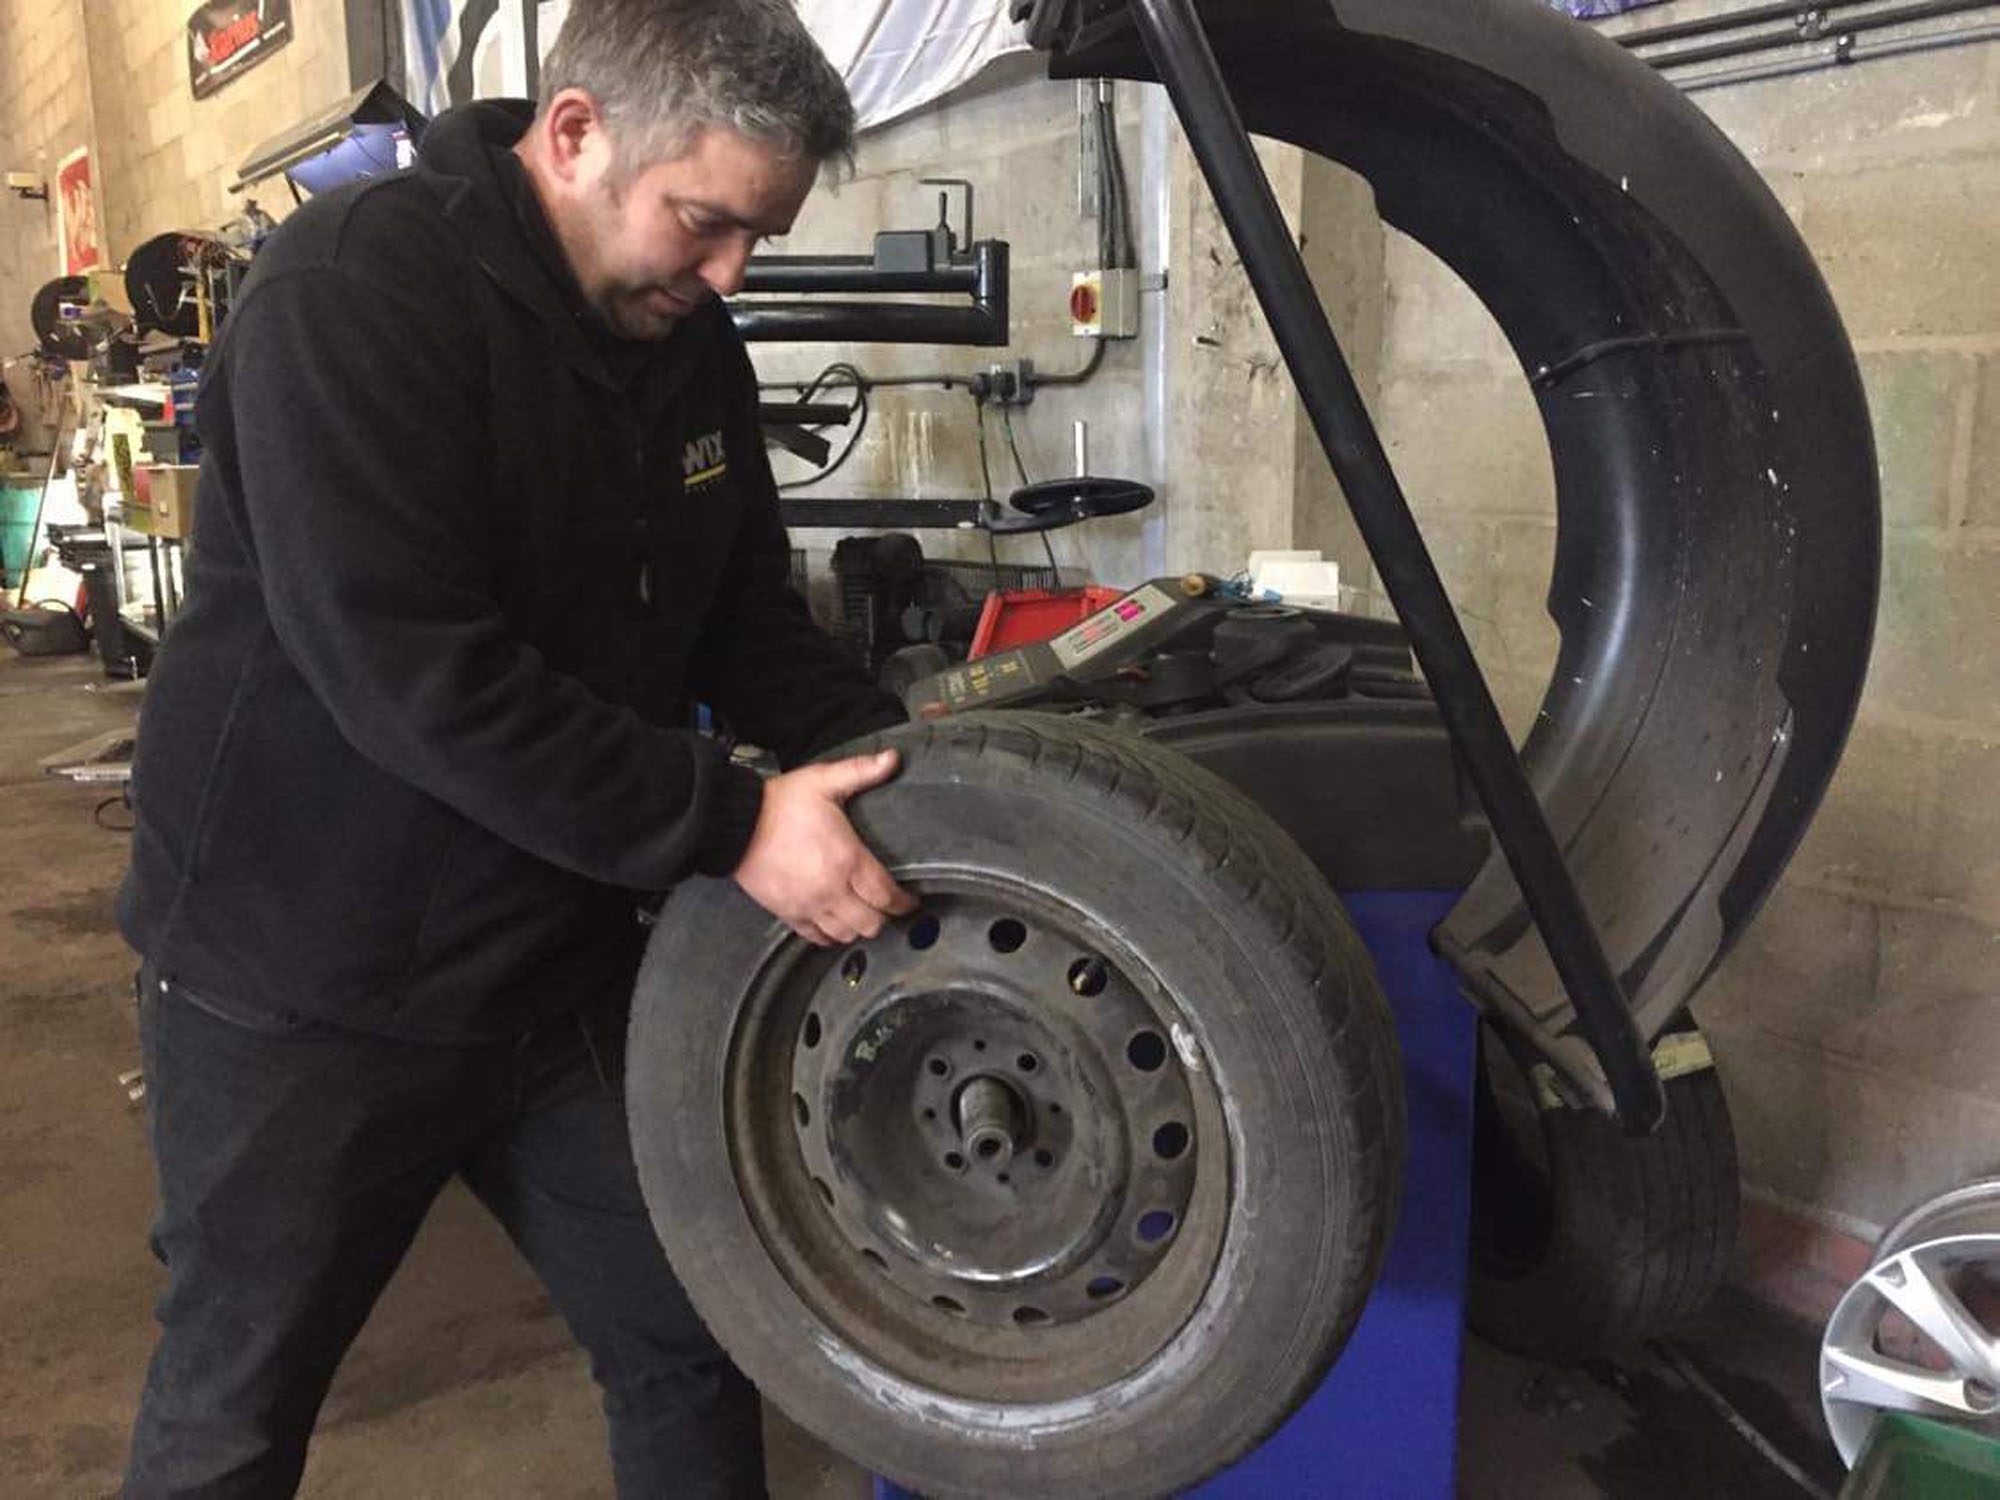 Manor Garage York offers wheel balancing